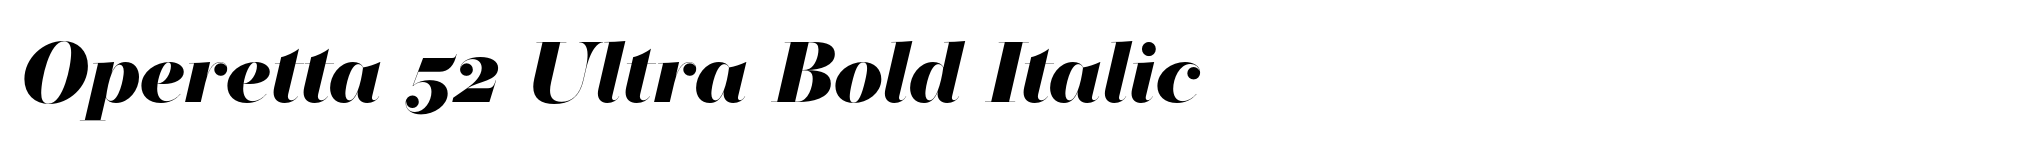 Operetta 52 Ultra Bold Italic image